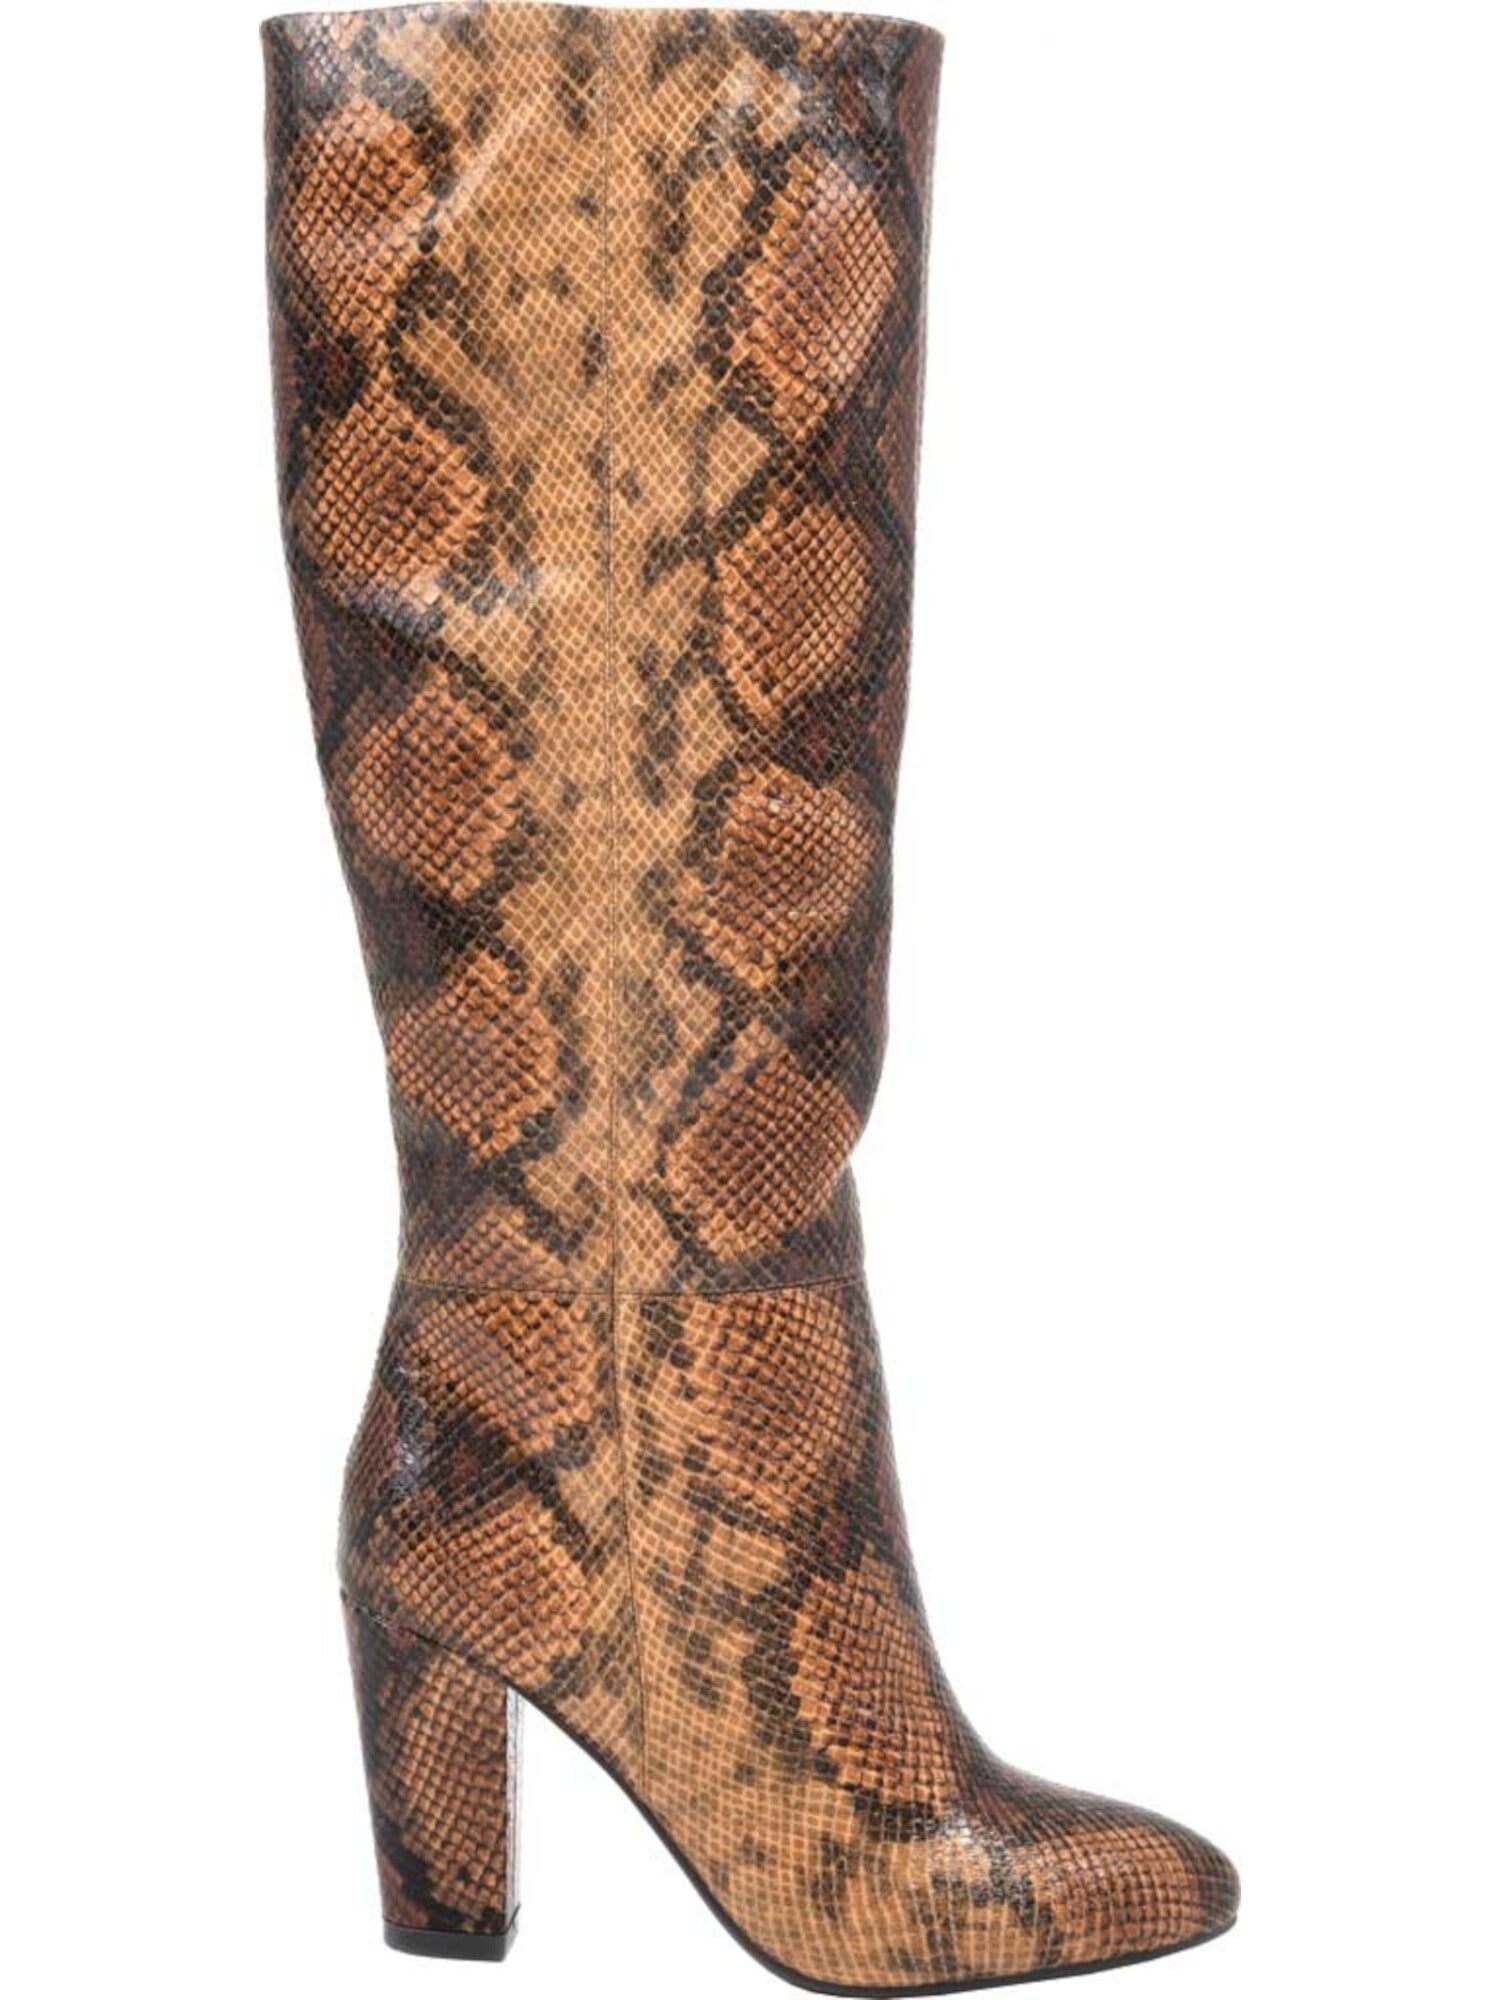 Walter Van Beirendonck Hyper Glam 75mm Snake-Print Boots - Brown